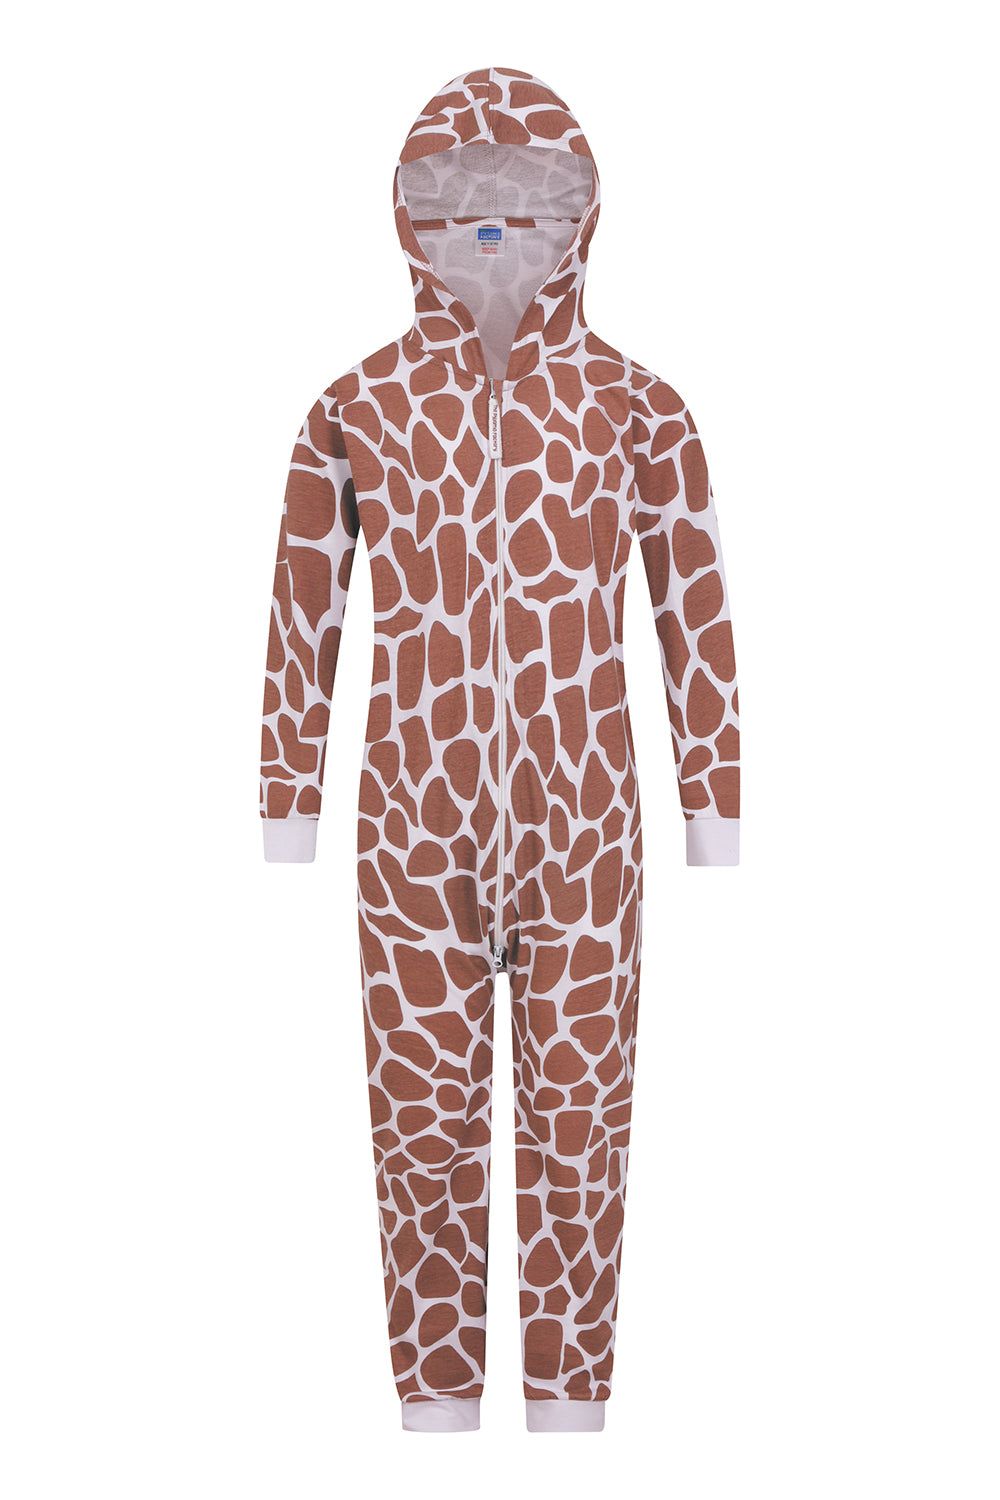 Girls Giraffe Sleepsuit Lounge Onesie